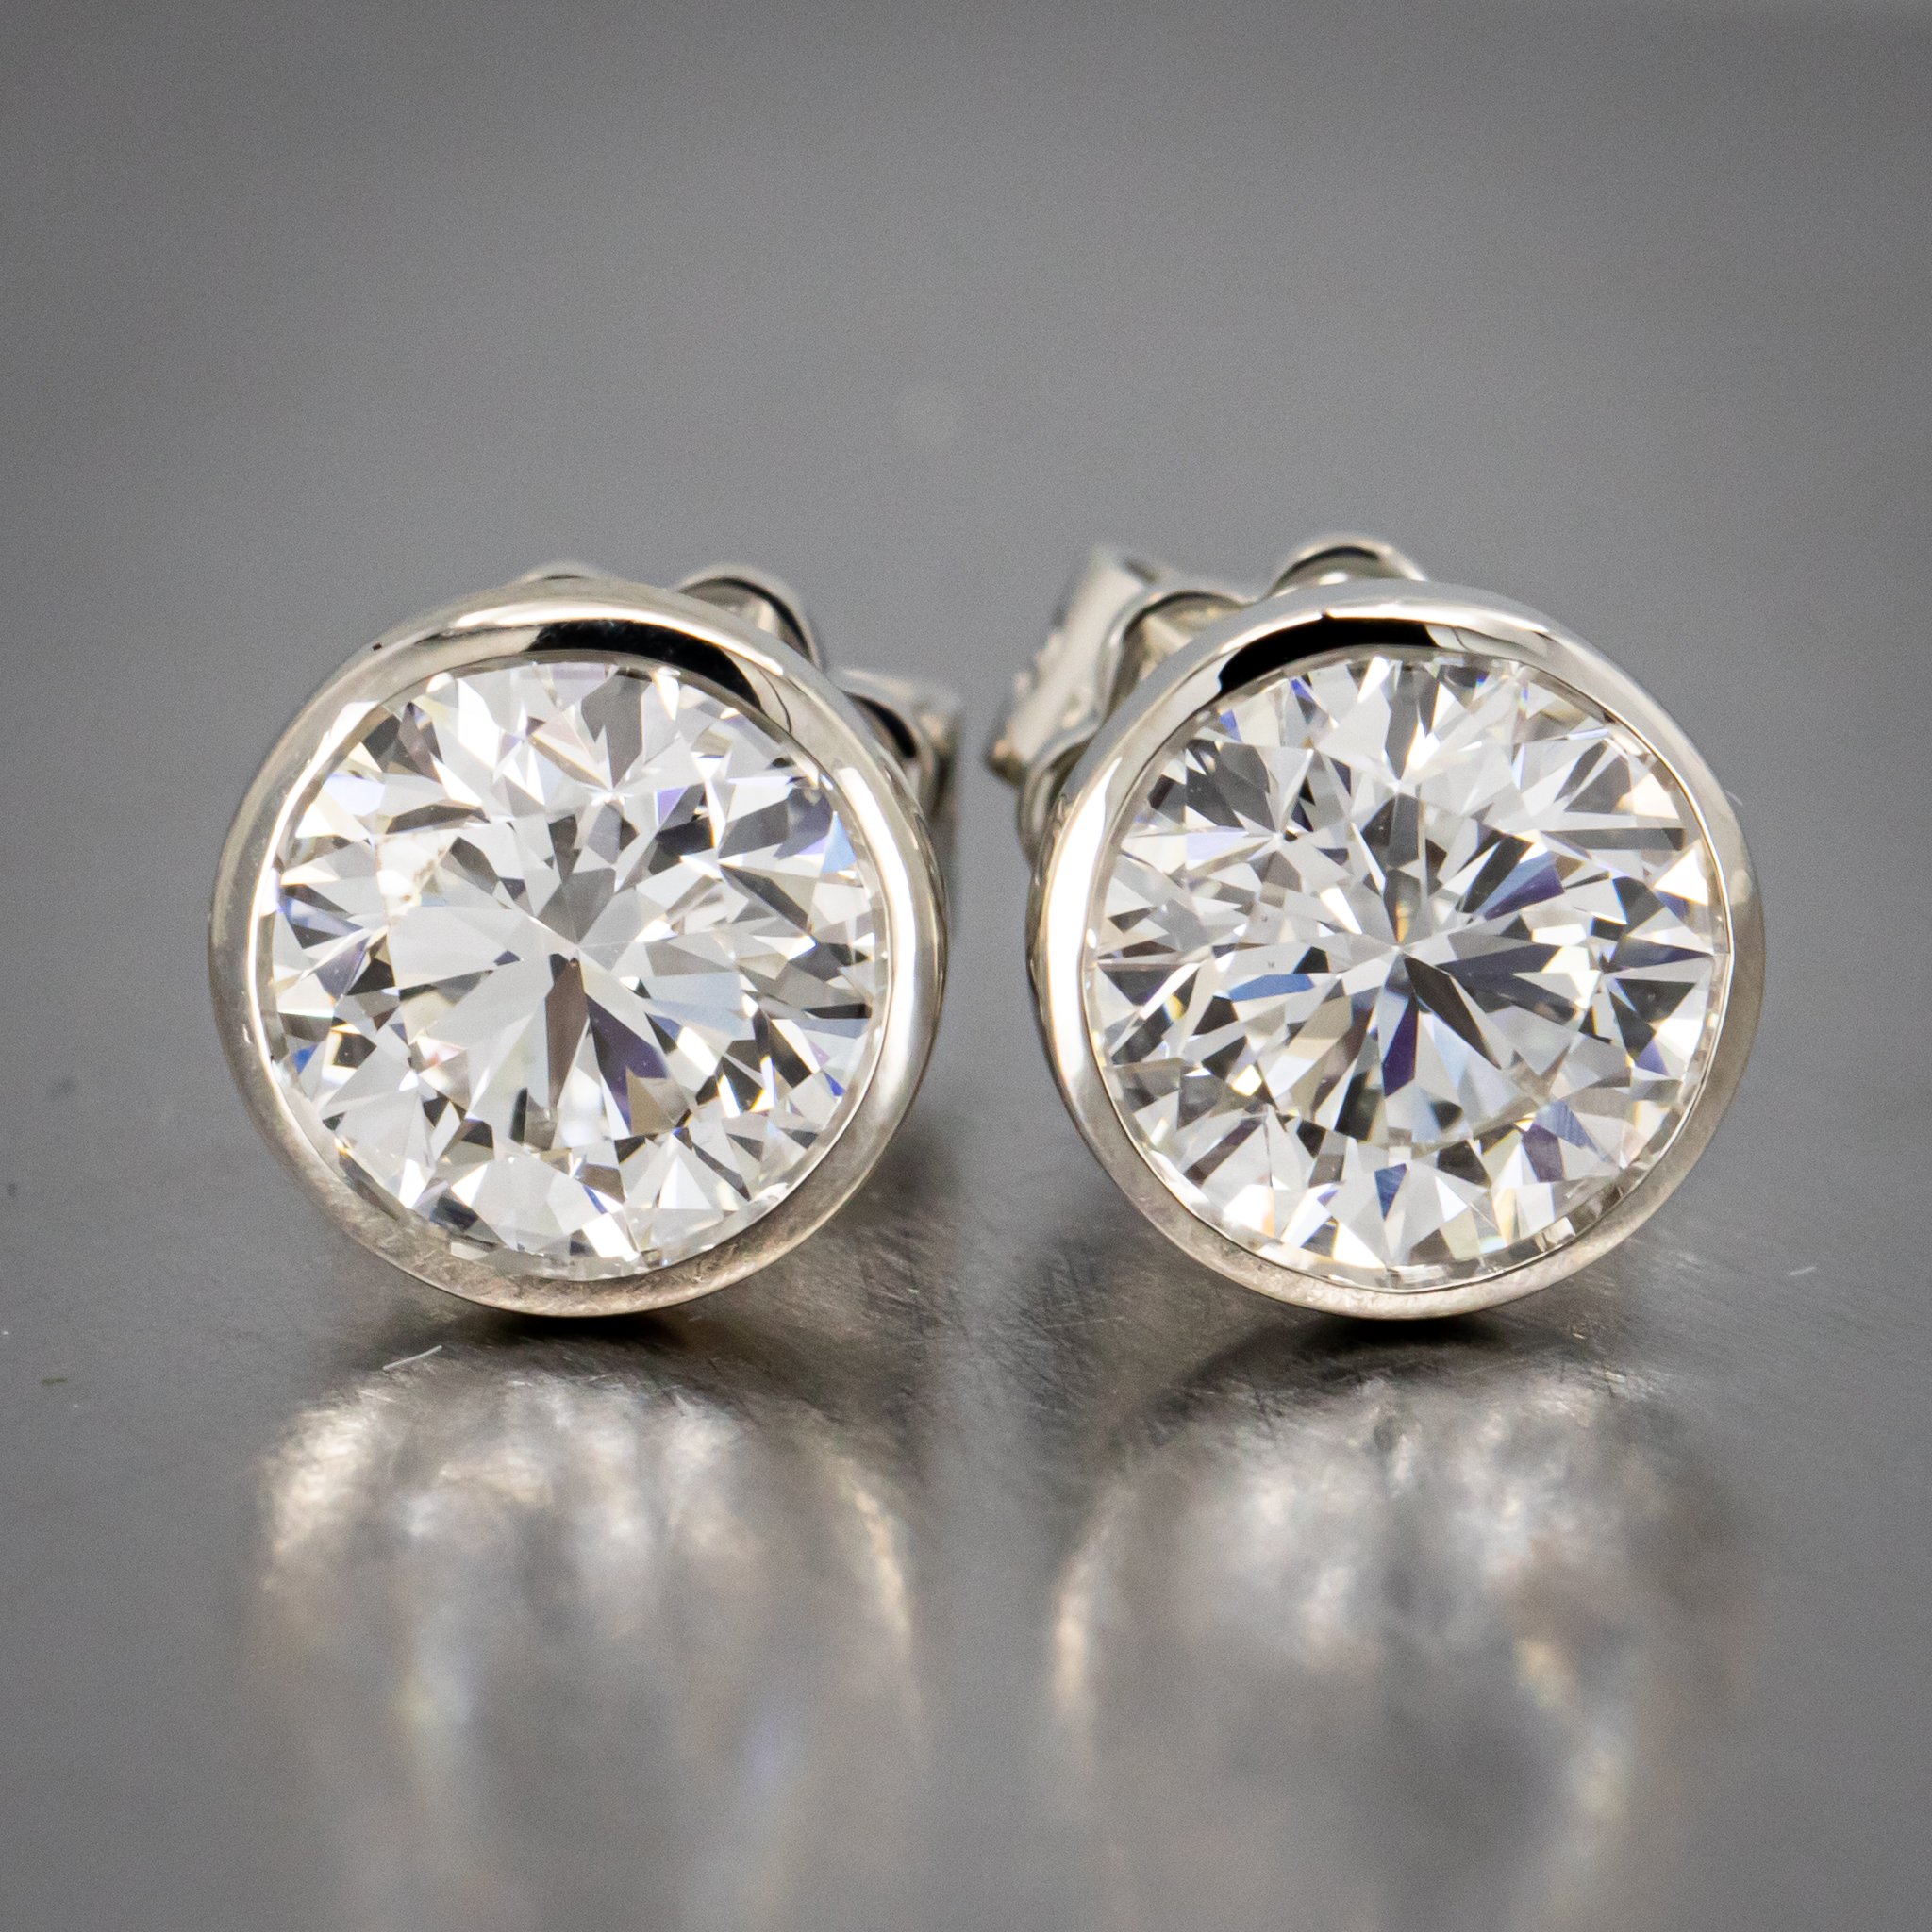 A Spin on the Modern Classic Diamond Studs - Bezel Set Platinum Stud Earrings Featuring Round Brilliant Cut Laboratory Grown Diamonds